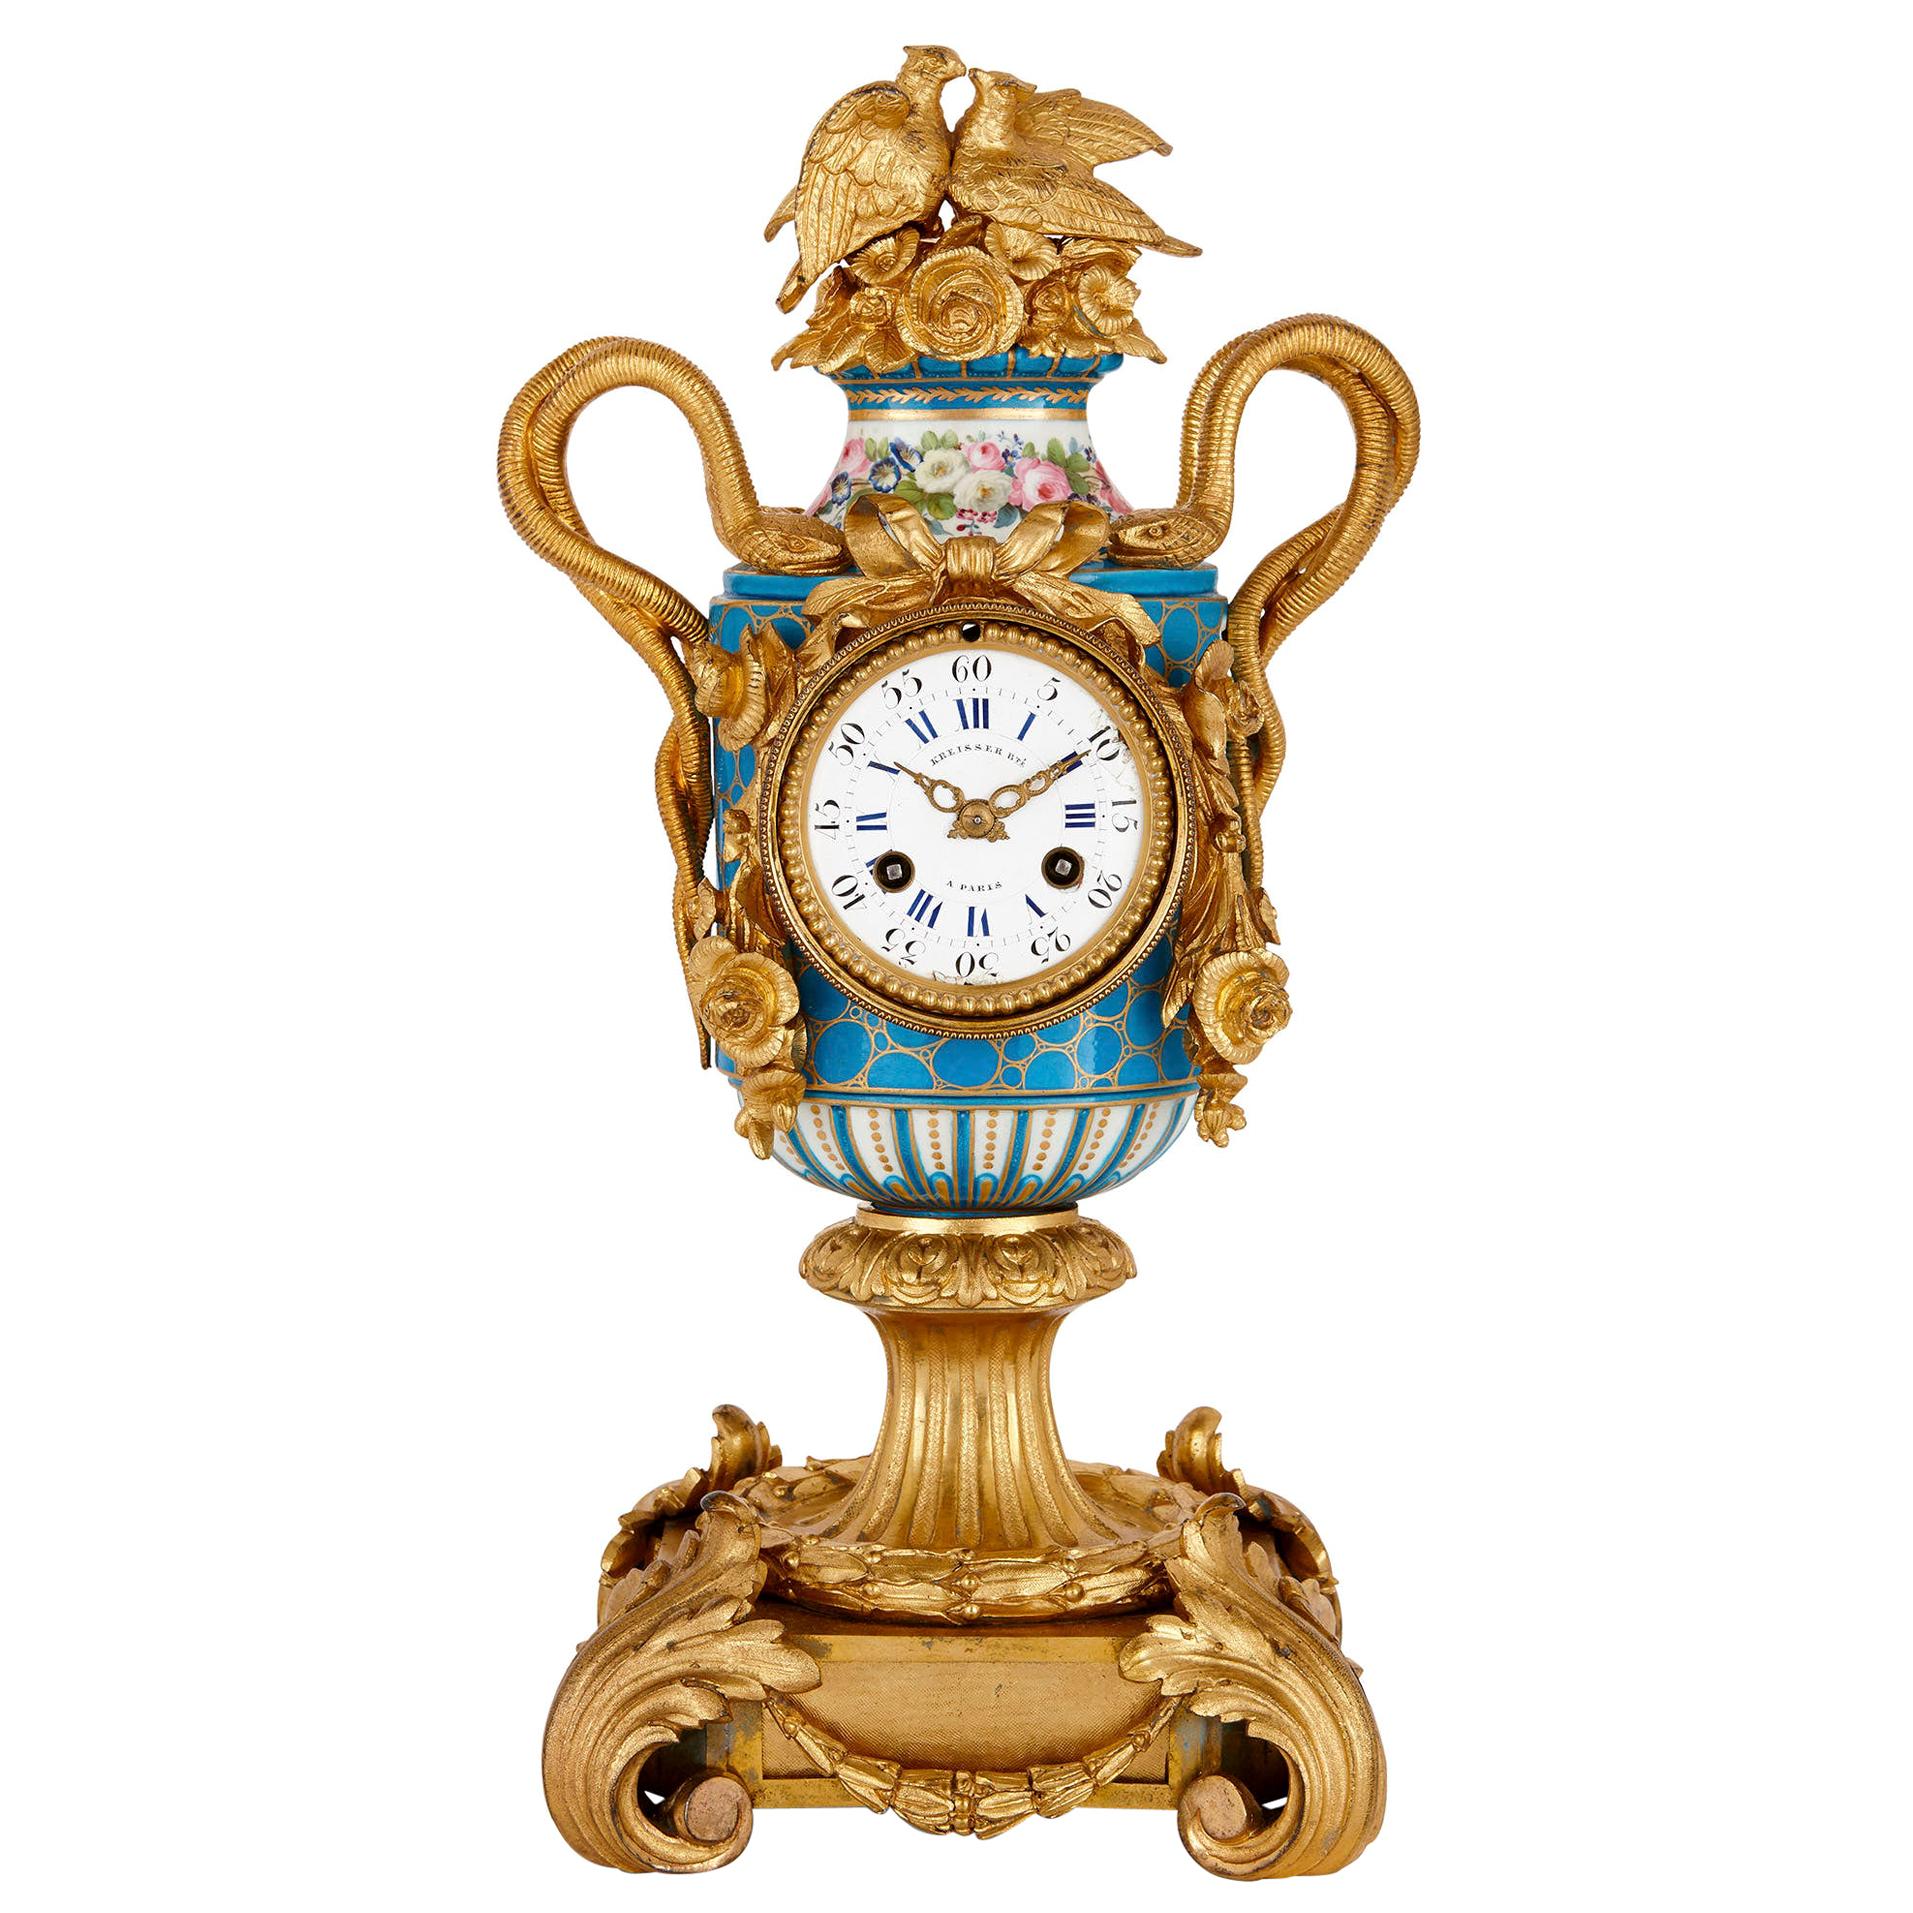 Sèvres Style Ormolu Mounted Mantel Clock by Kreisser